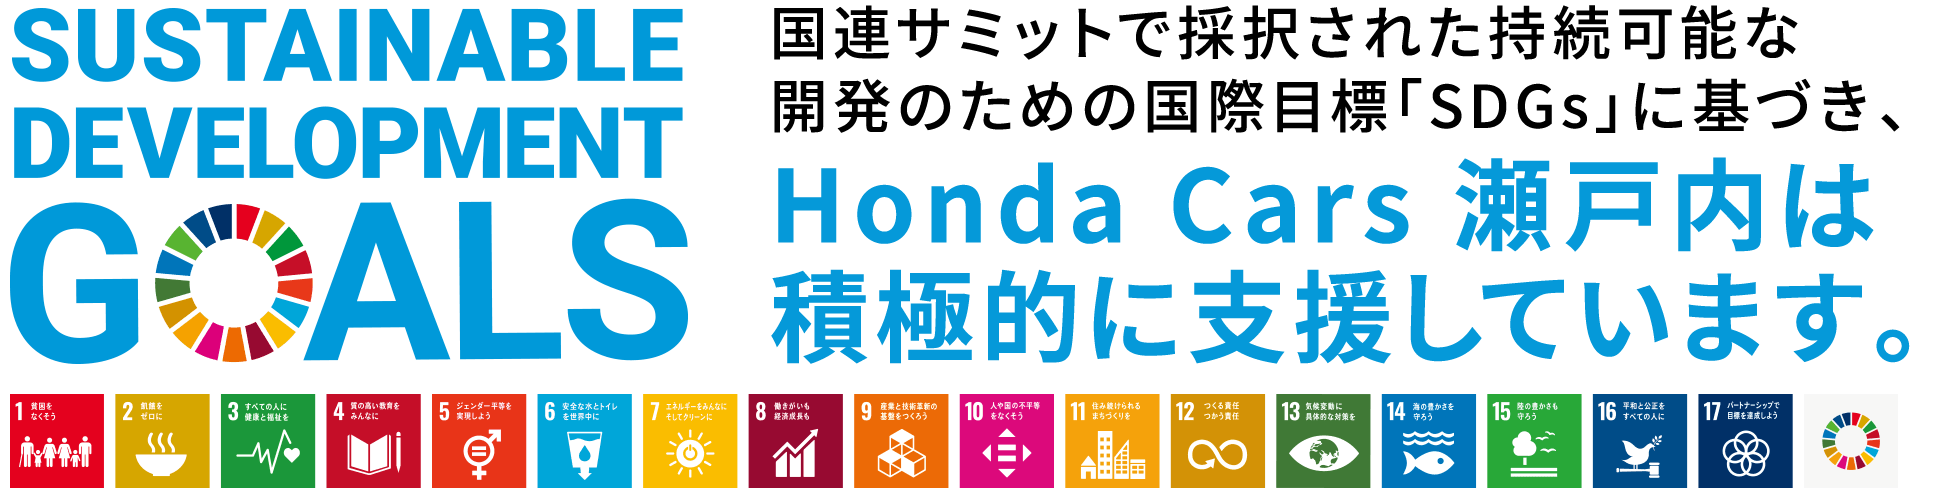 SUSTAINABLE DEVELOPMENT GOALS 国連サミットで採択された持続可能な開発のための国際目標「SDGs」に基づき、Honda Cars瀬戸内は積極的に支援しています。